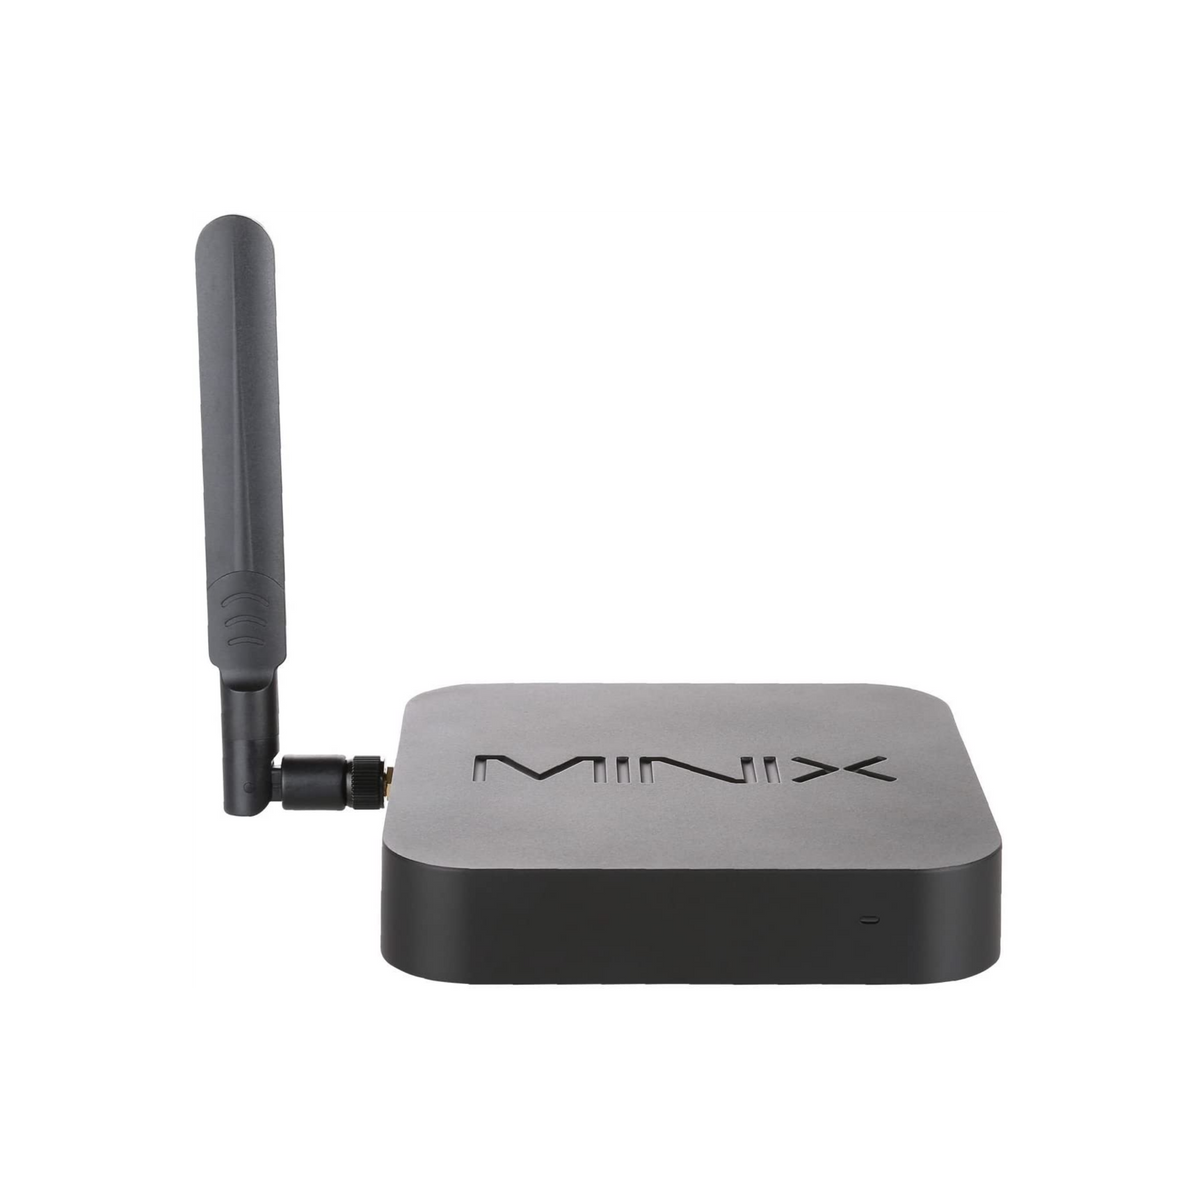 MINIX Neo Z83-4 Plus, 4G/64G Intel X5-Z8350 Fanless Mini PC Windows 10 Pro. Dual-Band Wi-Fi/Gigabit Ethernet/Mini DP/4K UHD/Auto Power On. Ideal Home/Office/Industrial and Digital Signage Solution